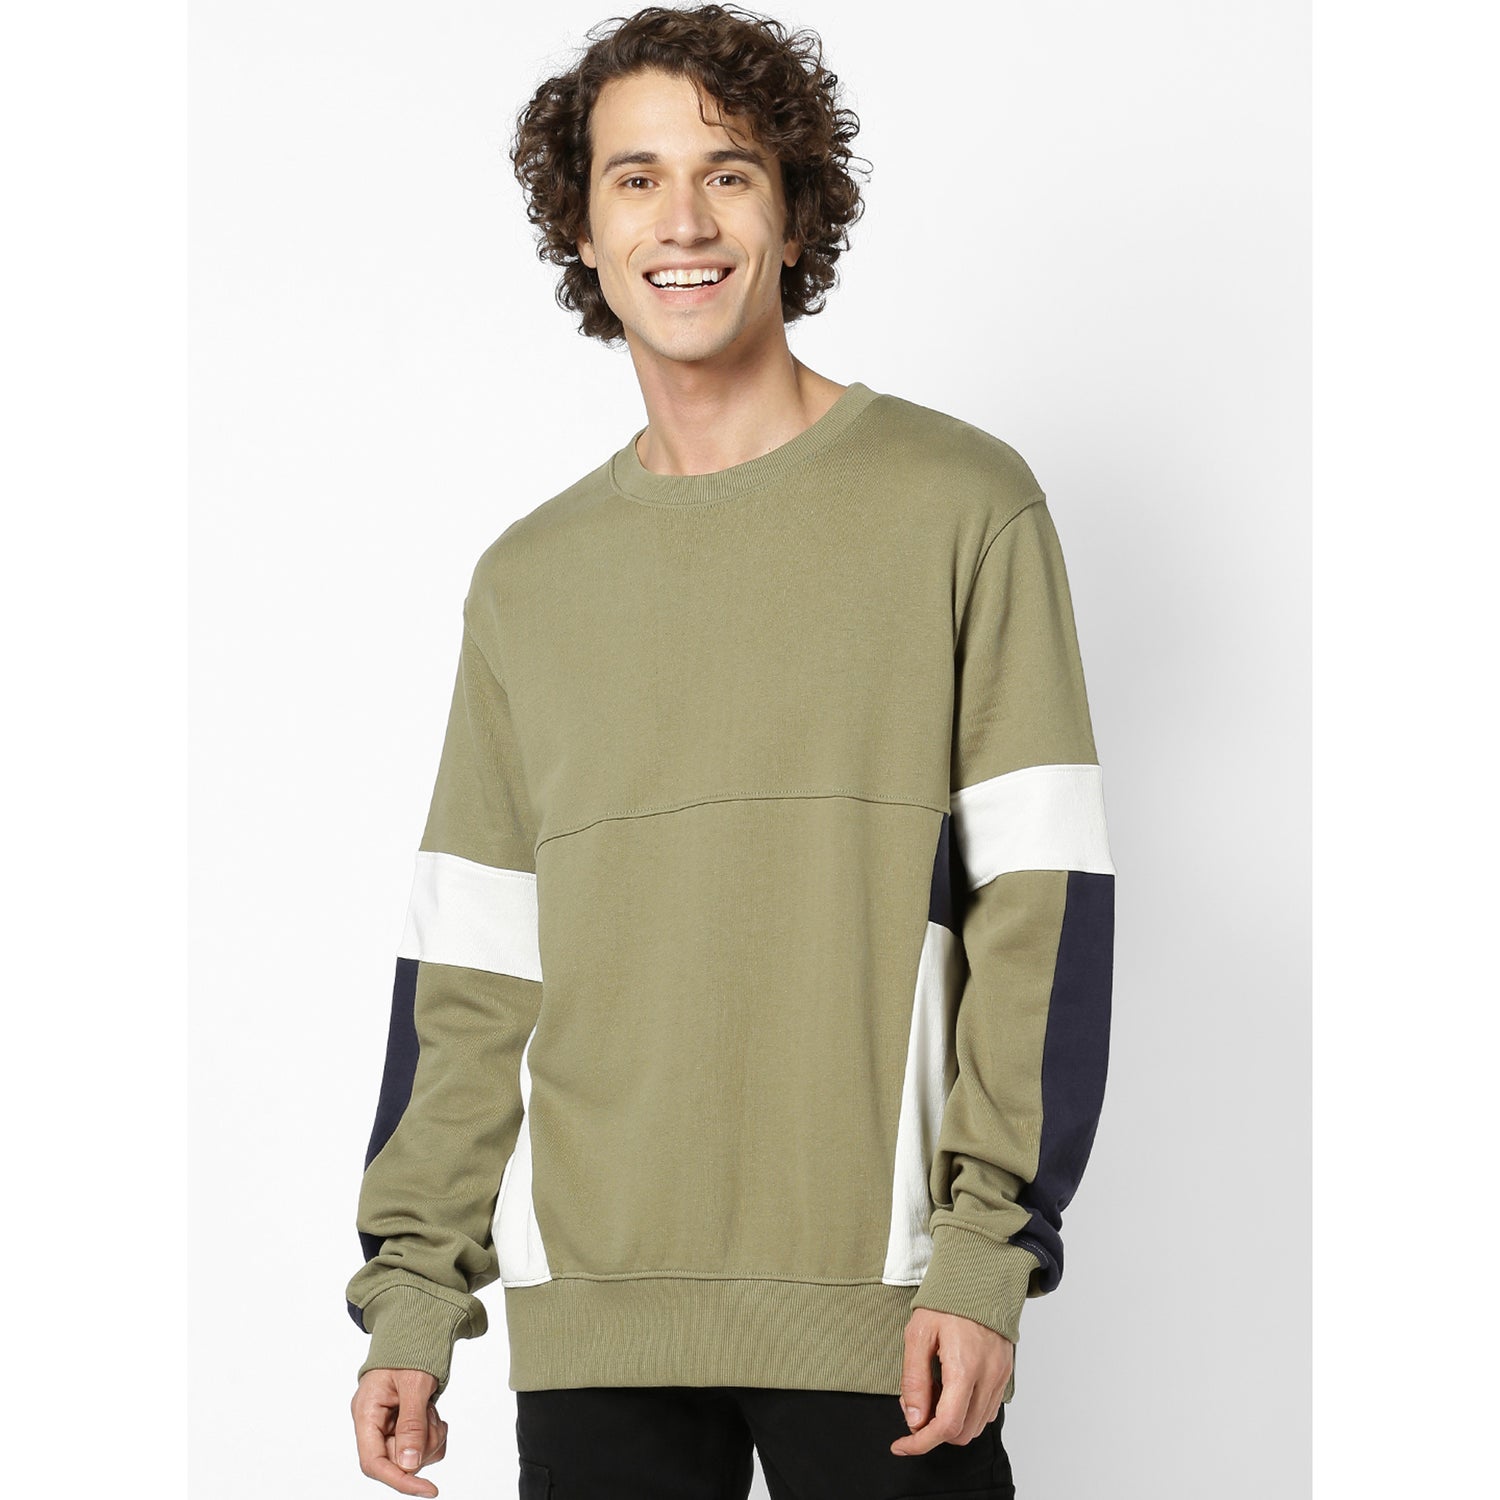 Olive Green and White Colourblocked Sweatshirt (SEPANEL)